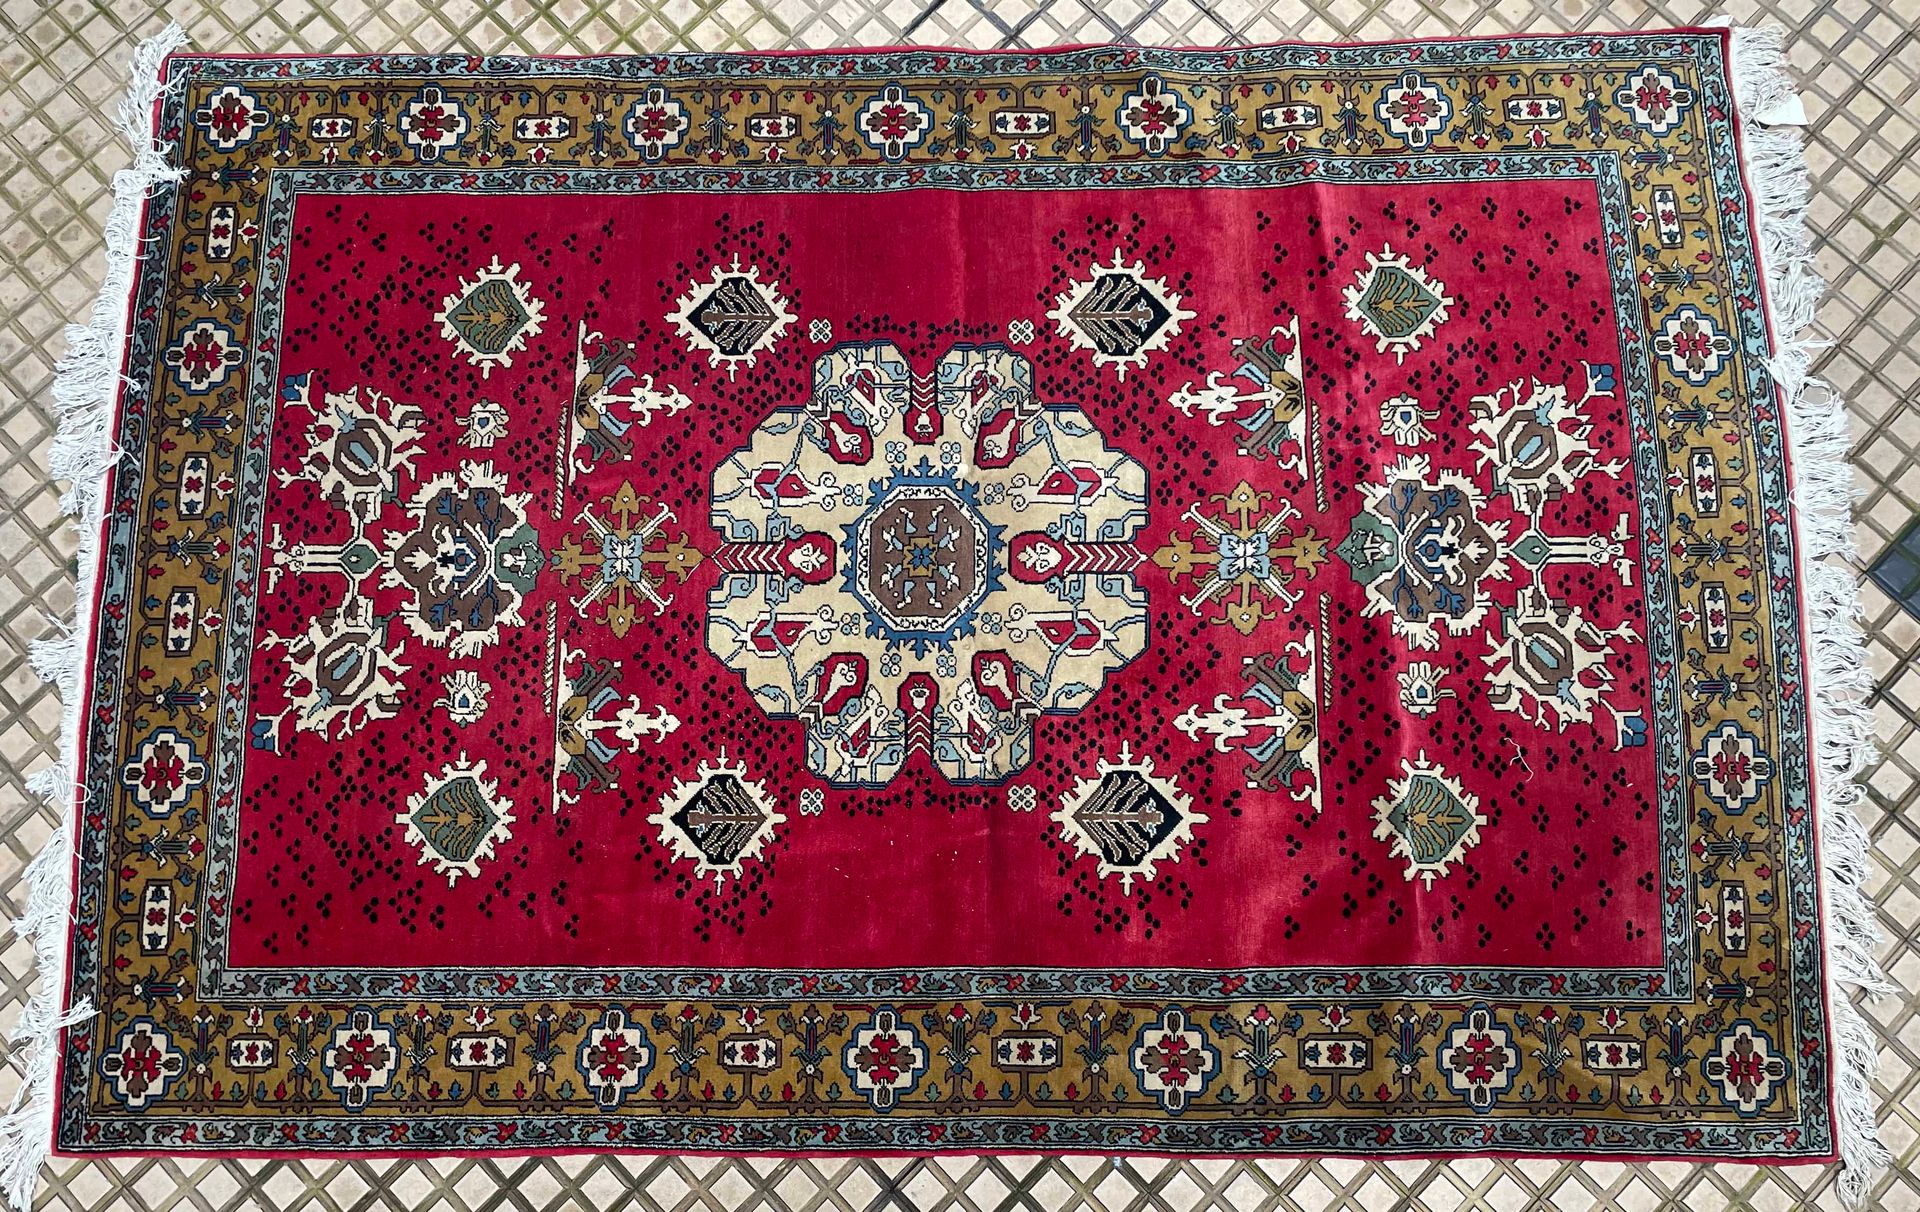 Null 地毯上有一个中央多边形徽章，在红色背景上装饰有几何图案，有三个边框，主要的边框是棕色背景。
280 x 196 cm